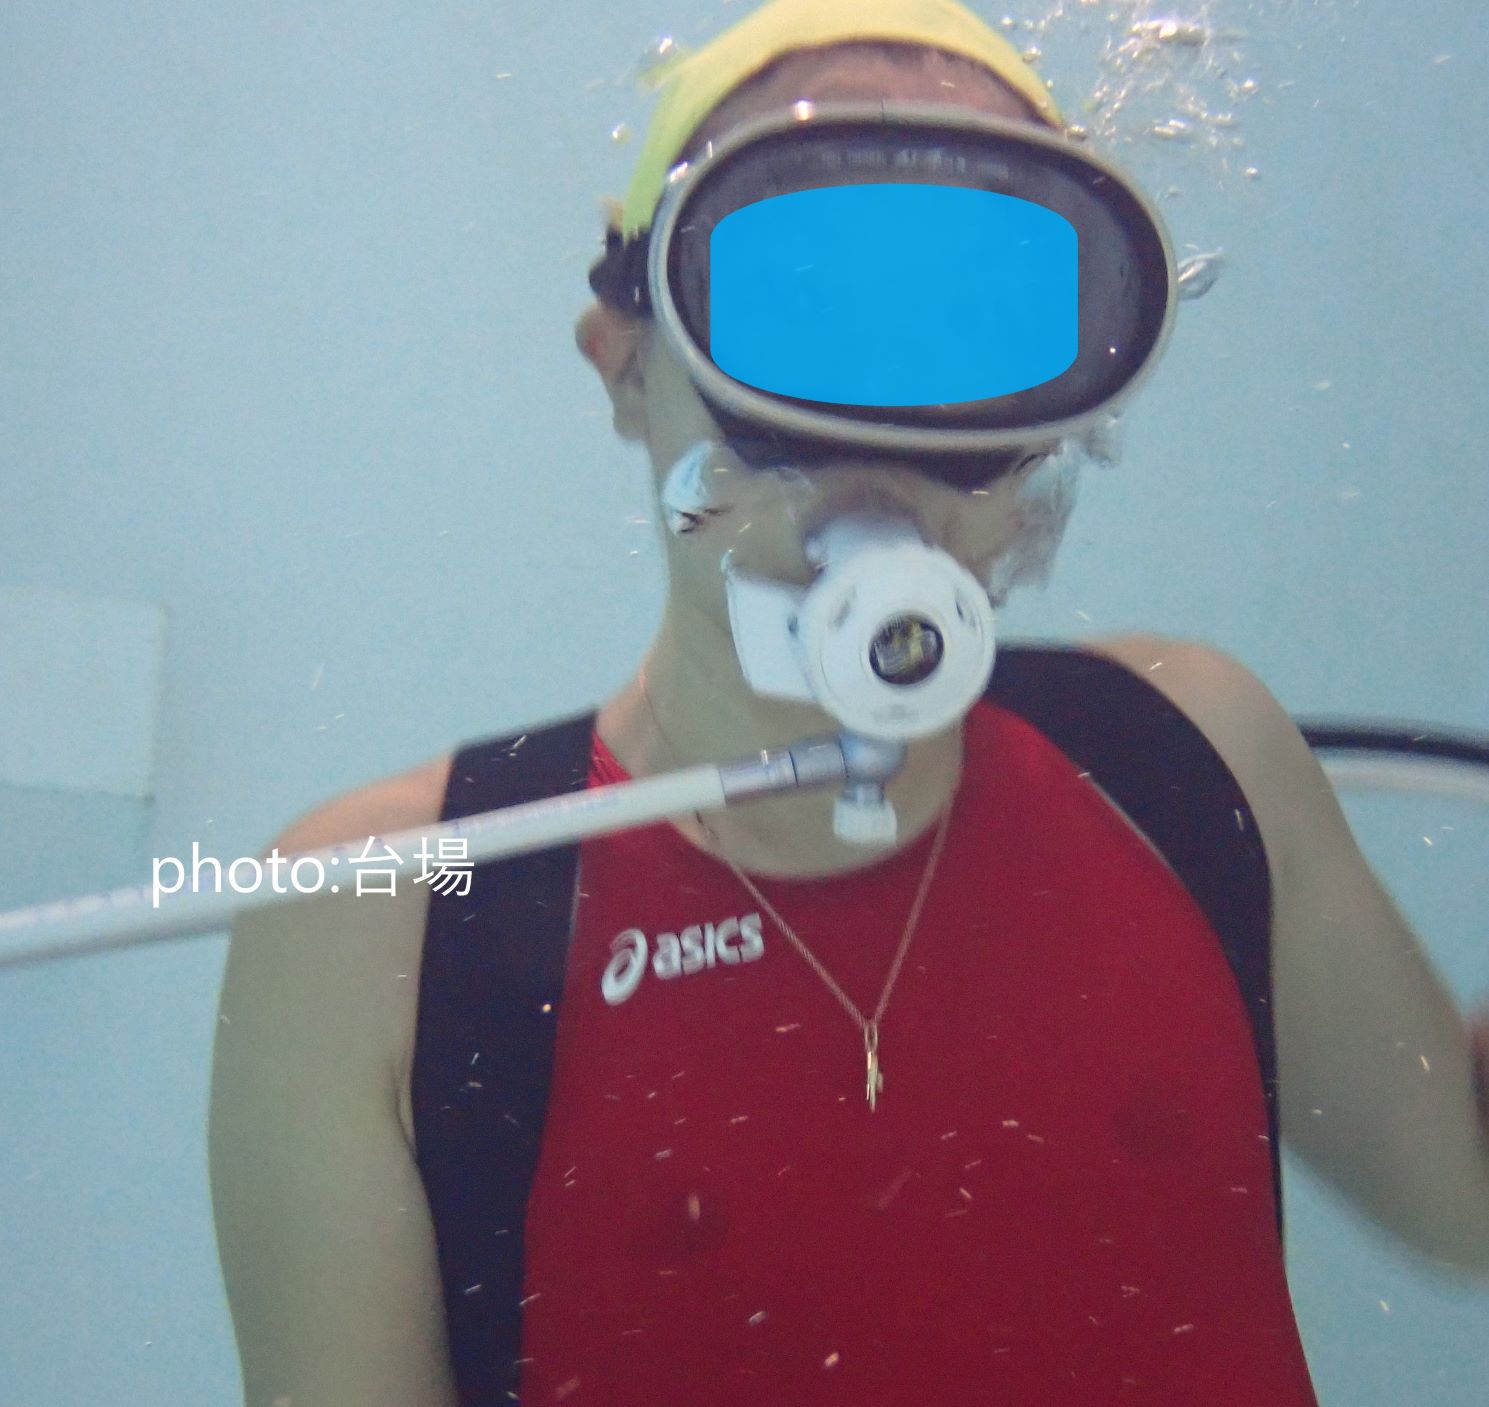 Deep 競泳水着画像掲示板へ投稿された台場様のDeep 競泳水着画像 No.16327434730002